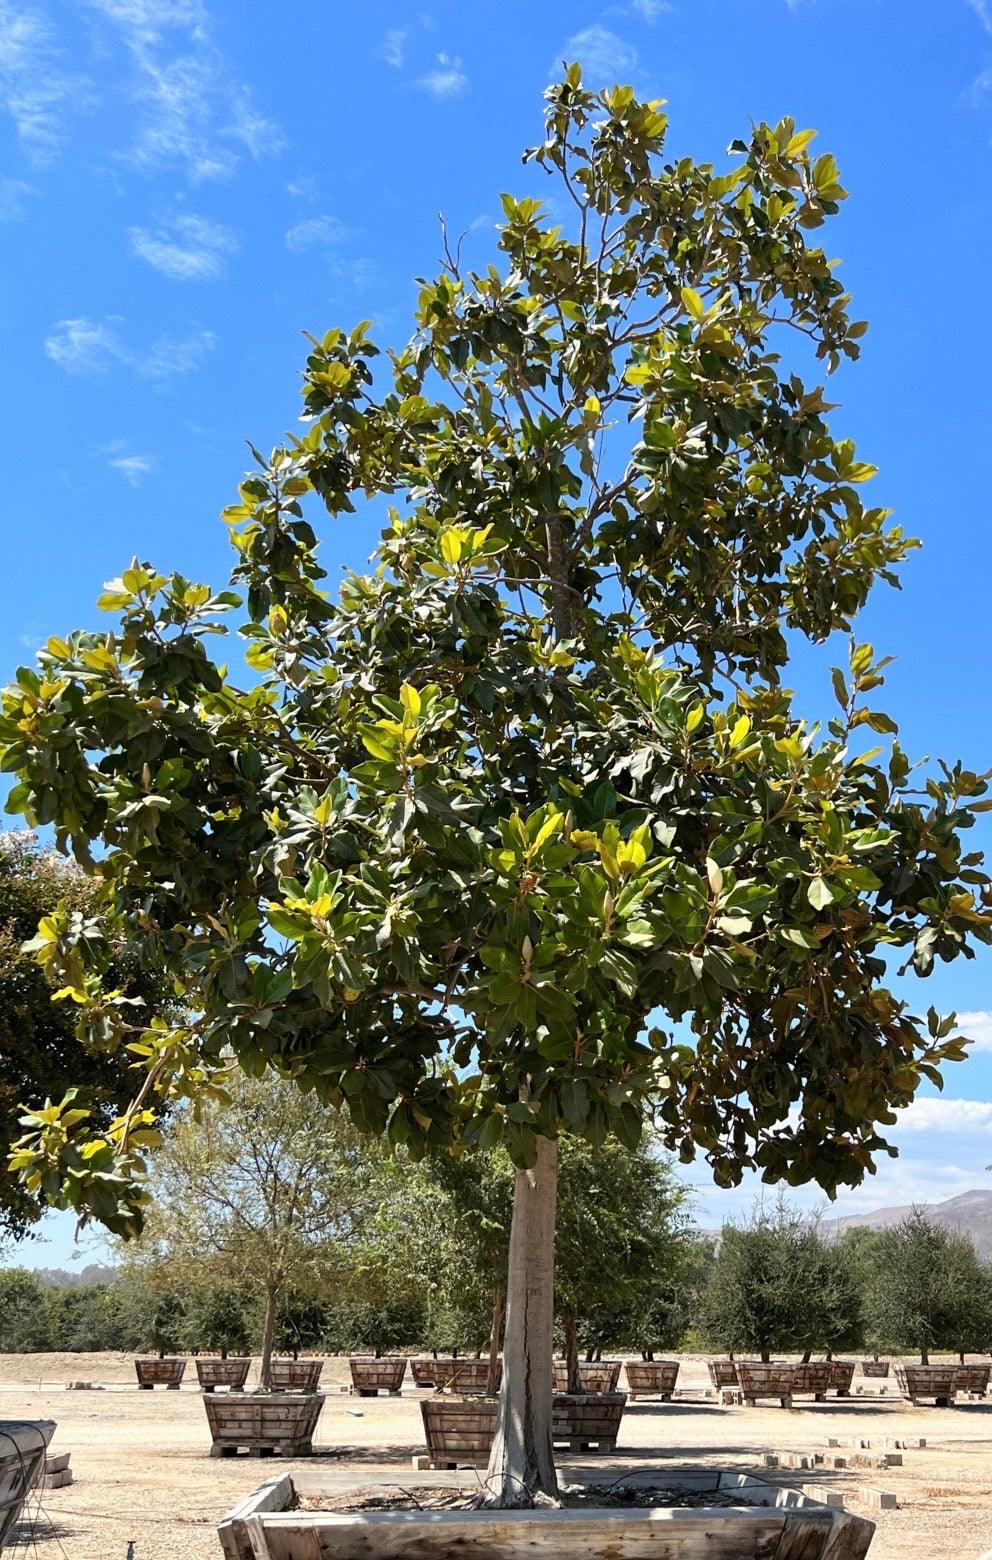 Southern Magnolia (Magnolia Grandiflora) - Pulled Nursery